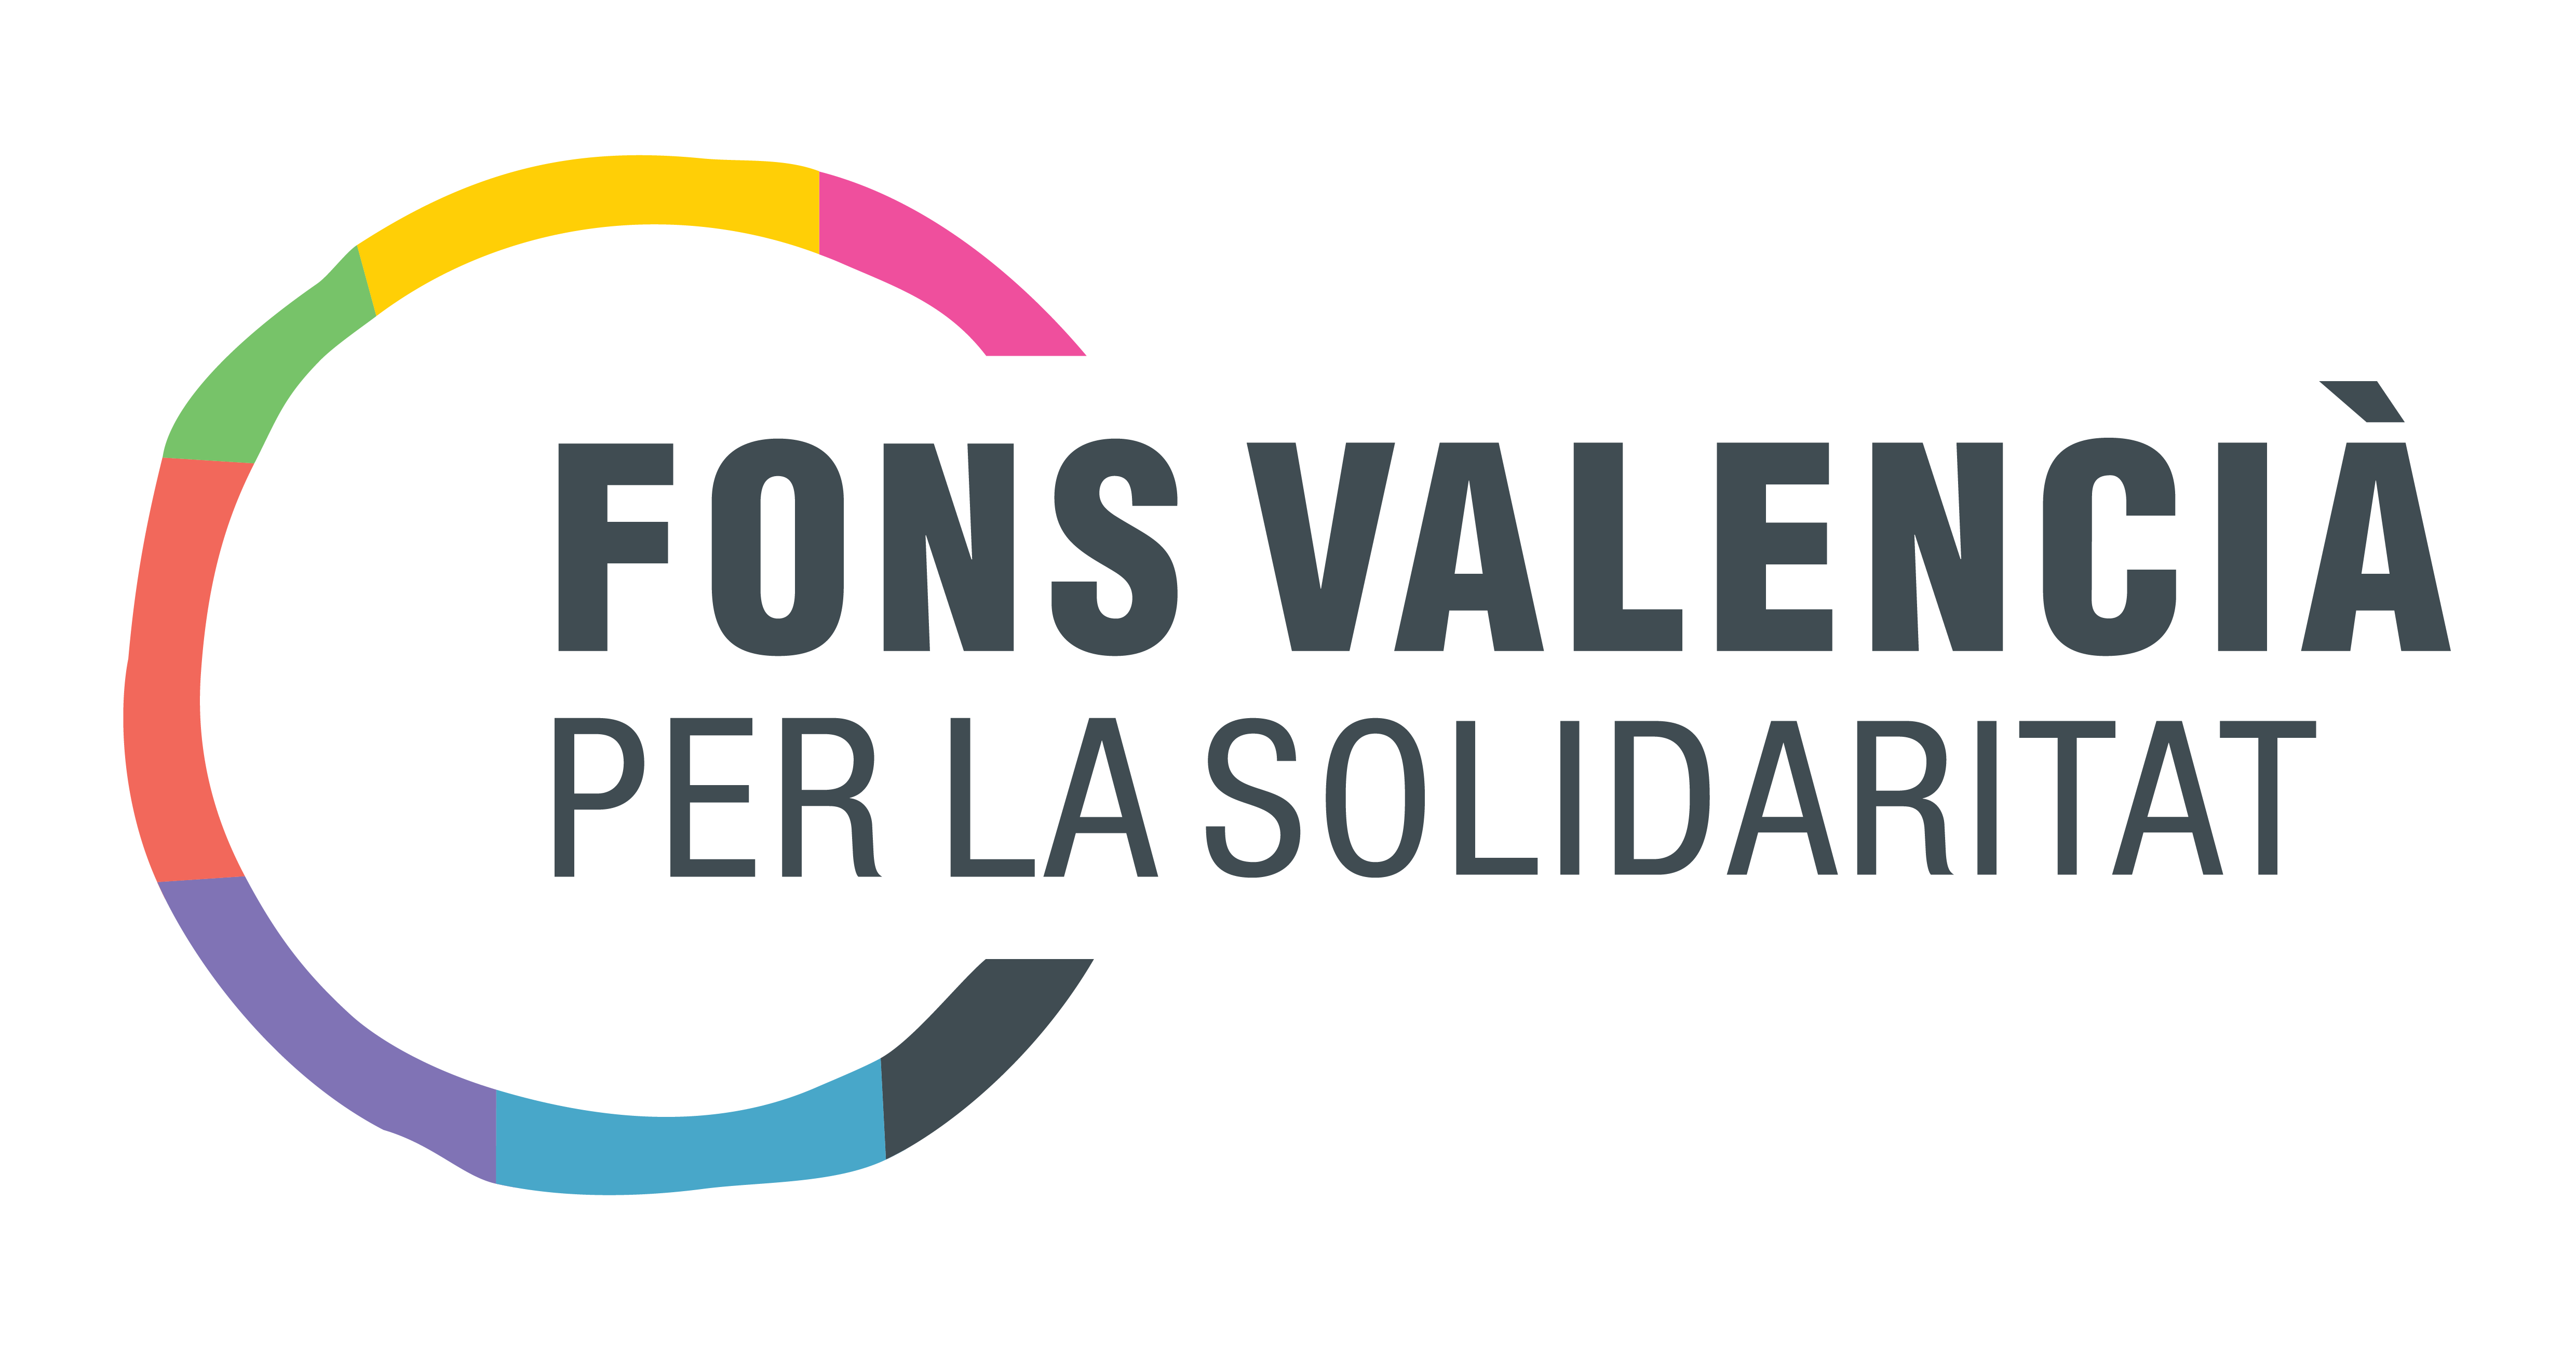  221108_fons-valencia-solidaritat fonsvalenciasolidaritat